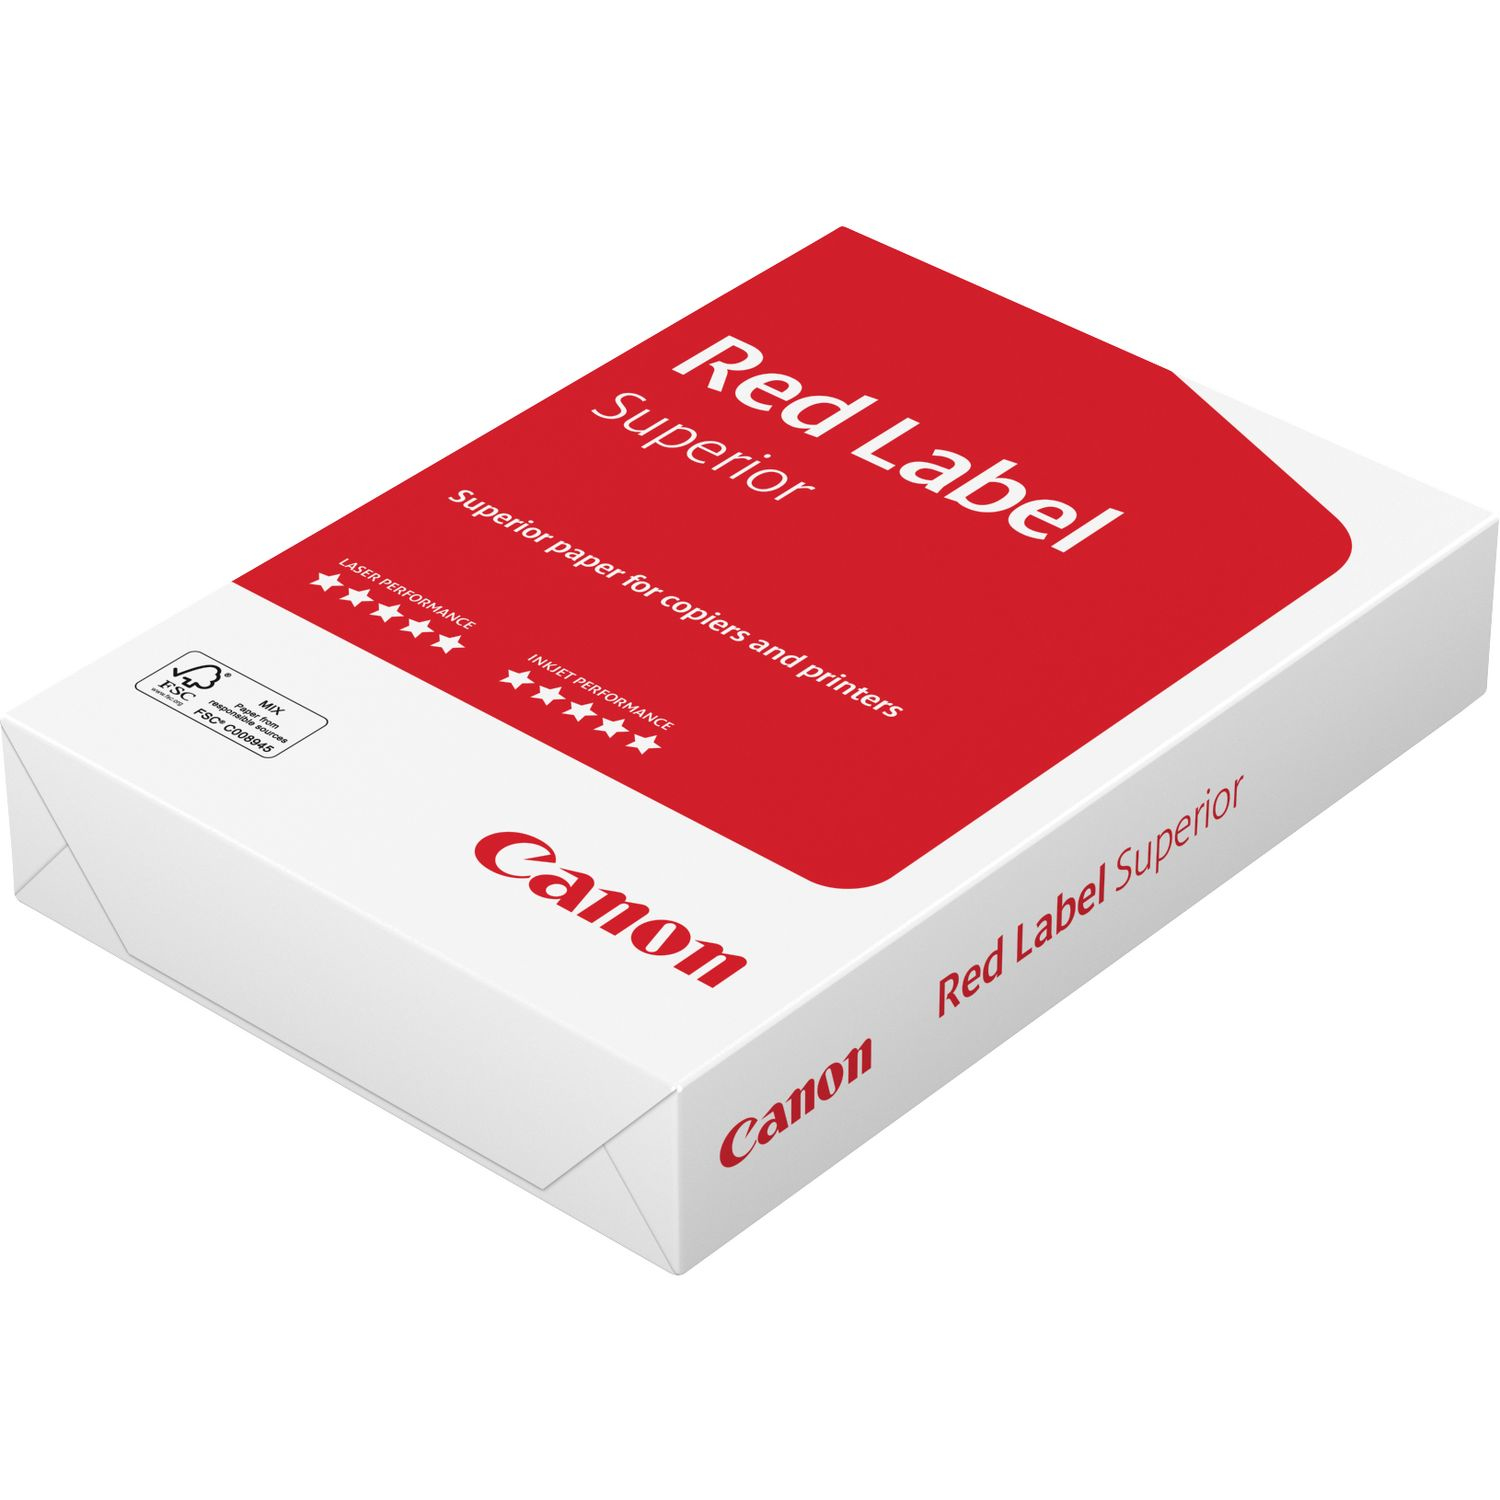 Canon Red Label Superior FSC datapapper A3 (297x420 mm) 500 ark Vit